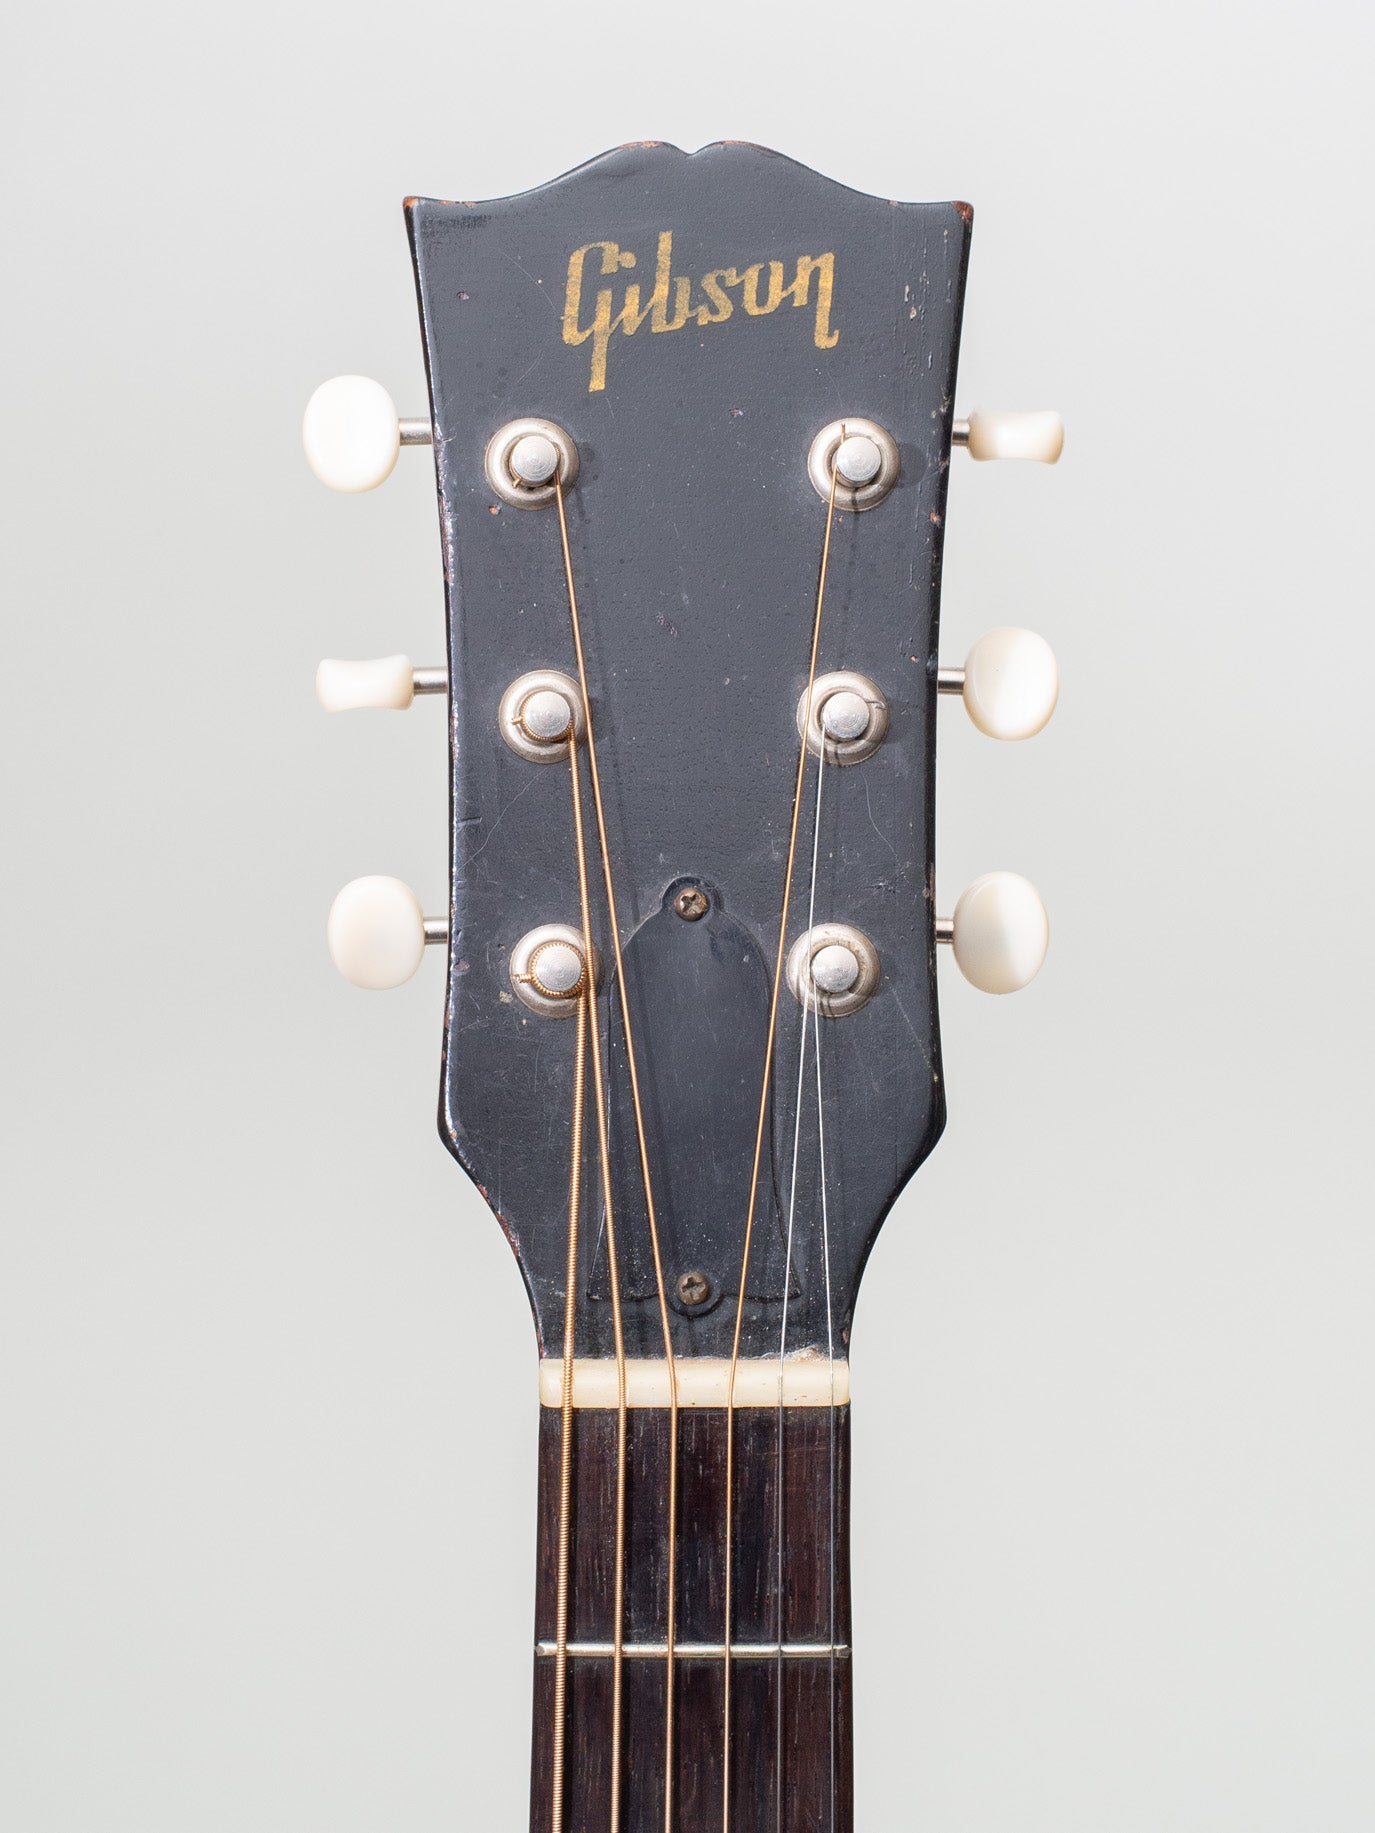 1950 Gibson J-45